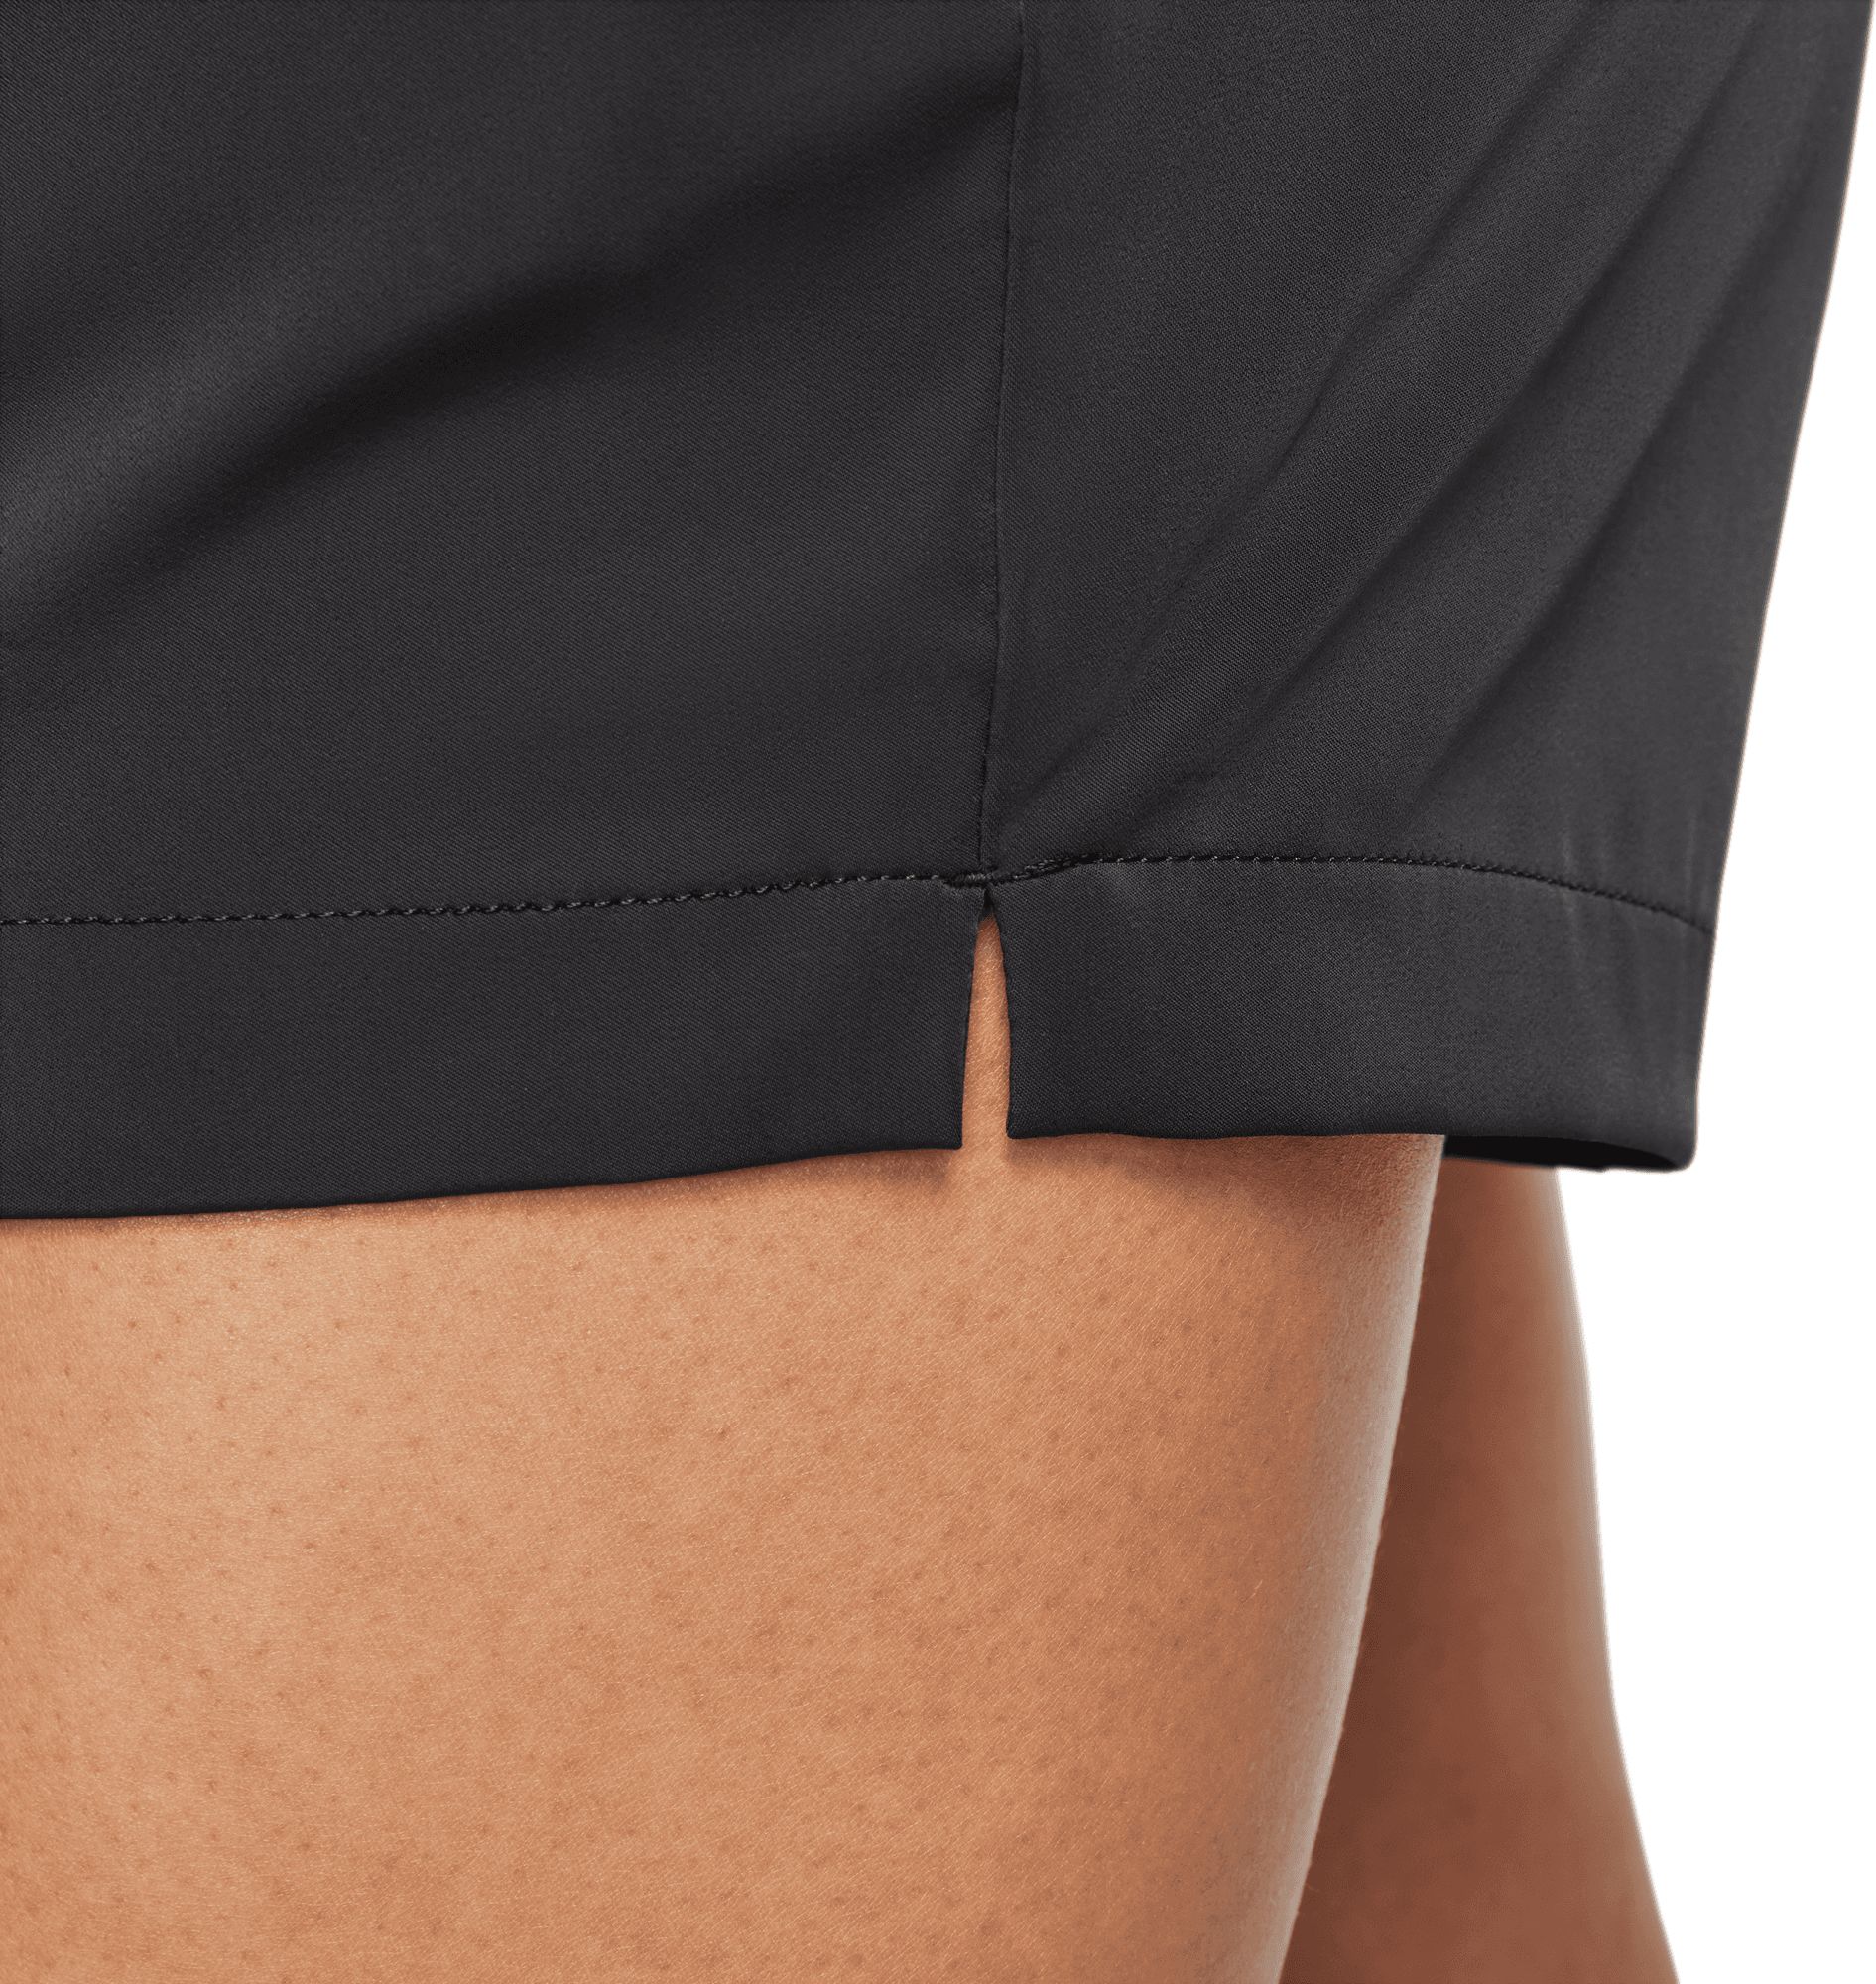 NIKE, Nike Dri-FIT Victory Women's 5" Golf Shorts